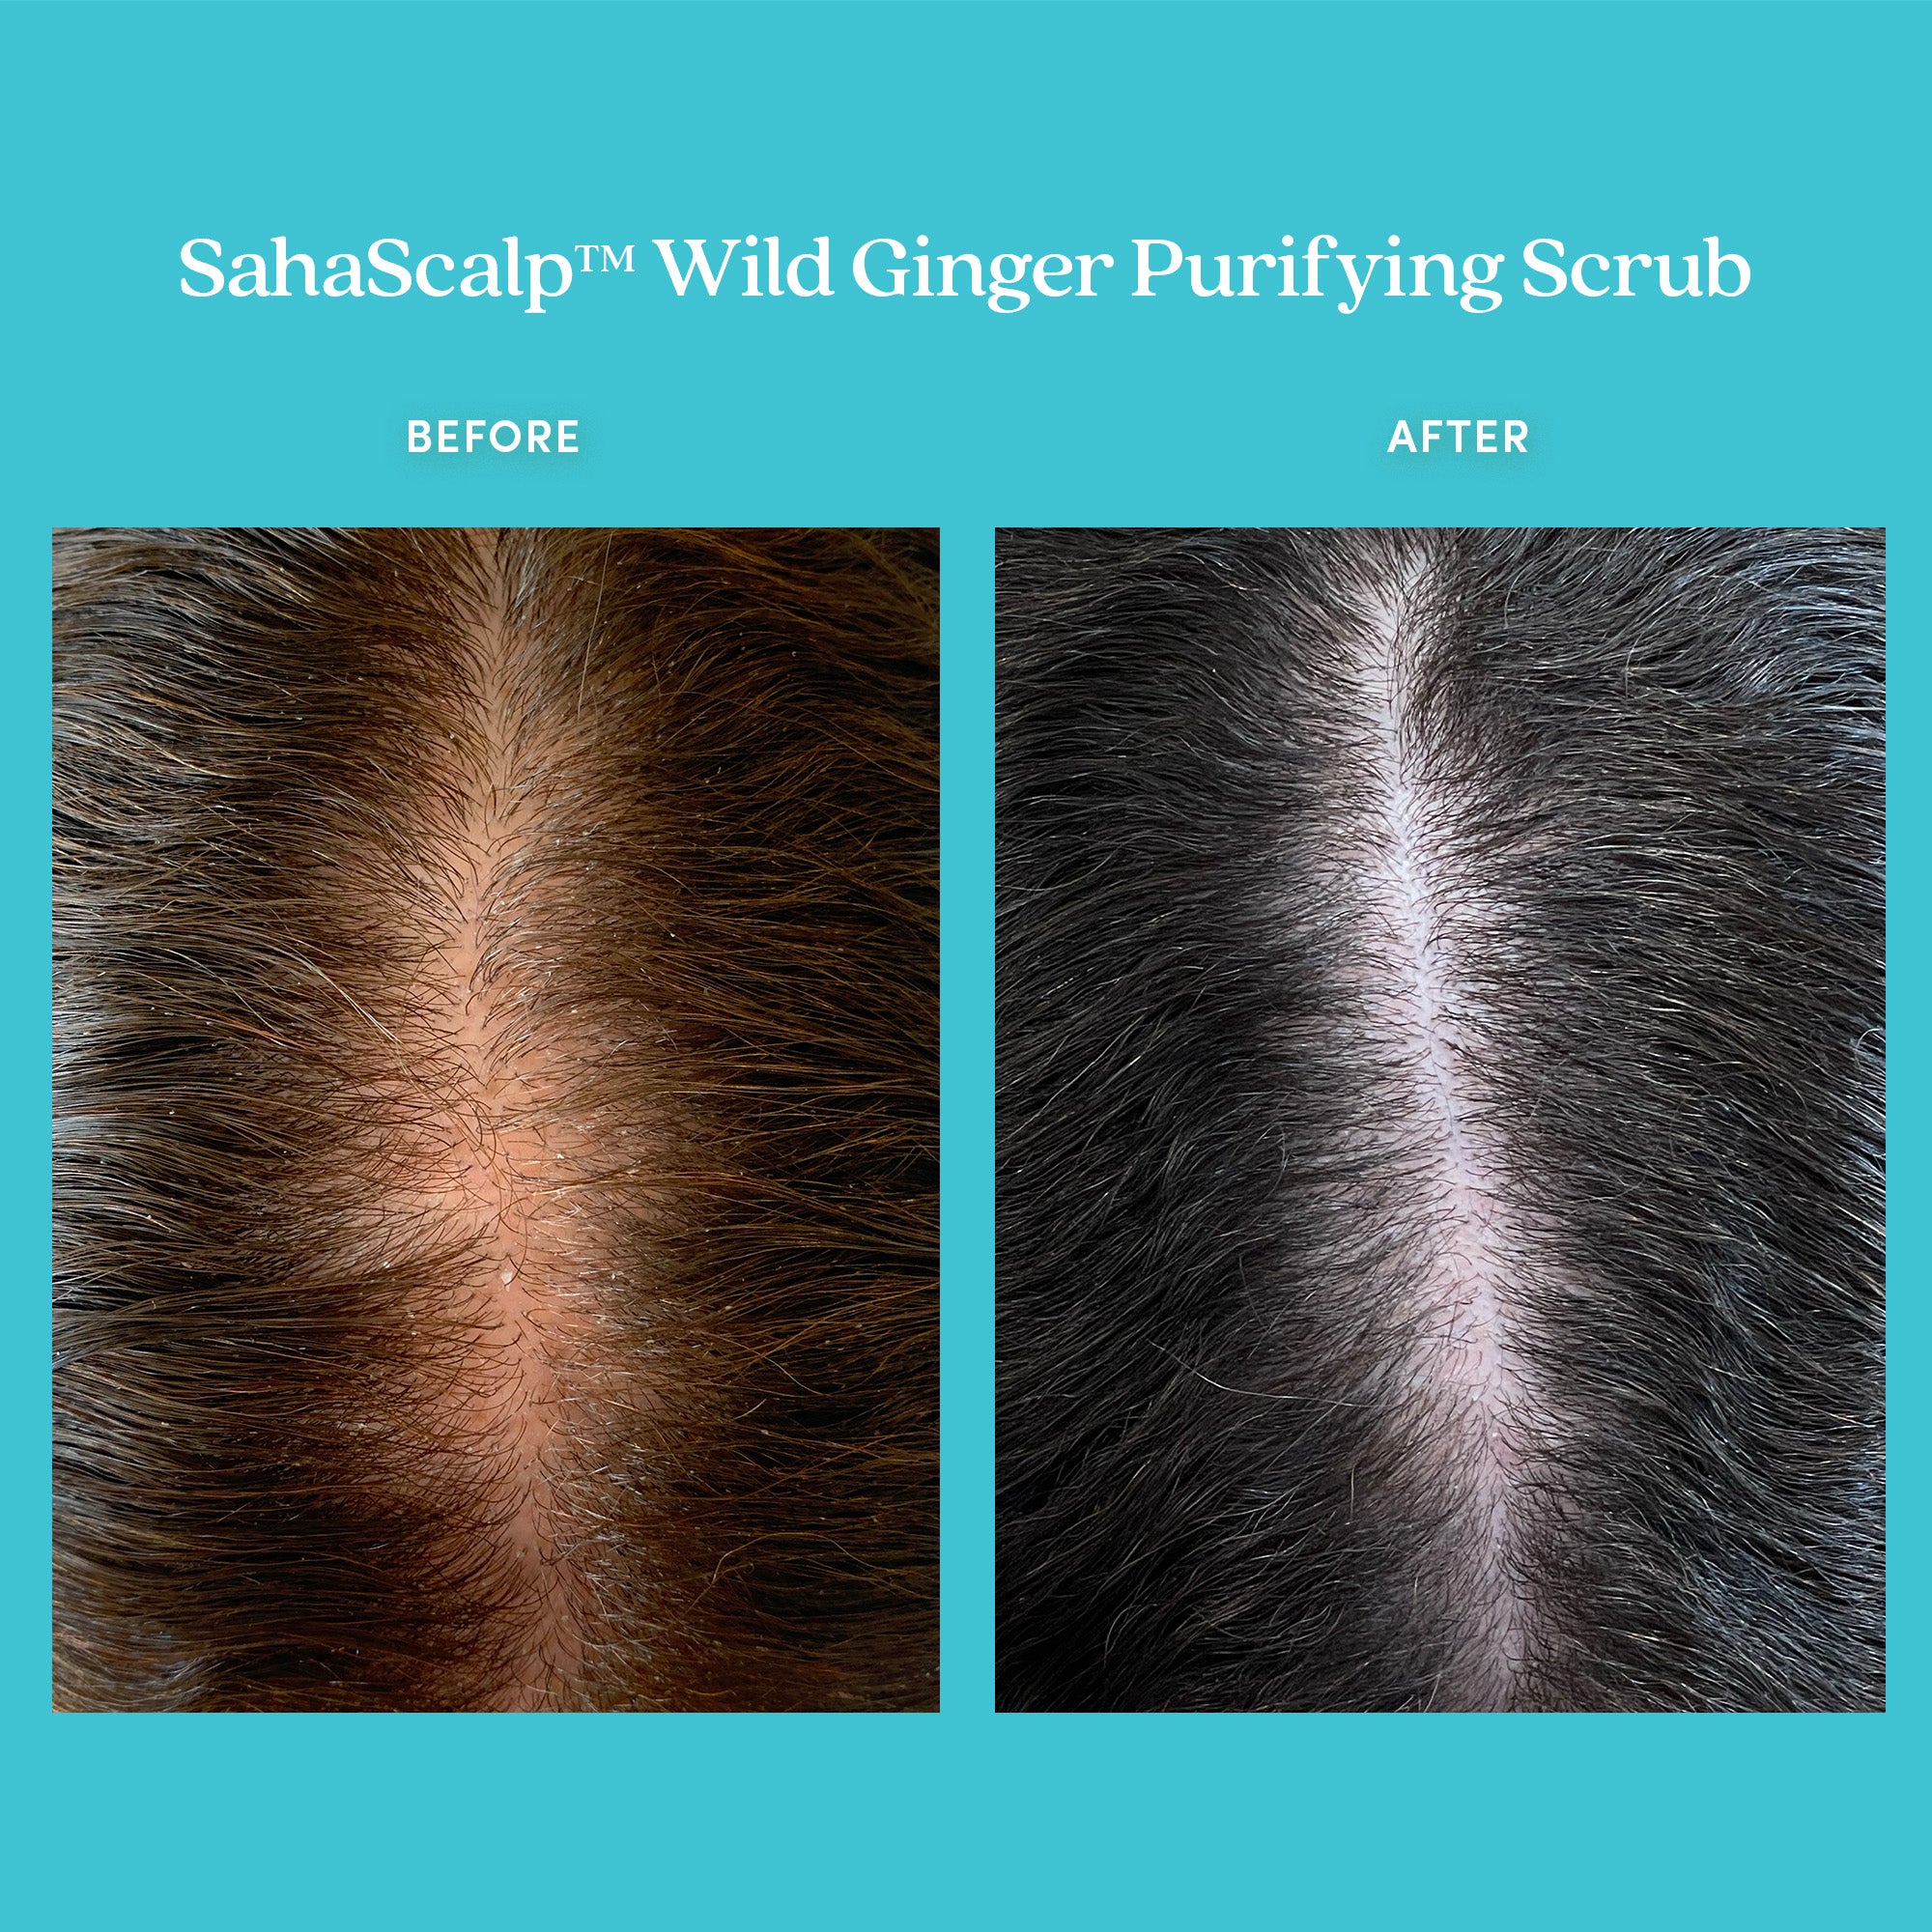 SahaScalp™ Wild Ginger Purifying Scrub